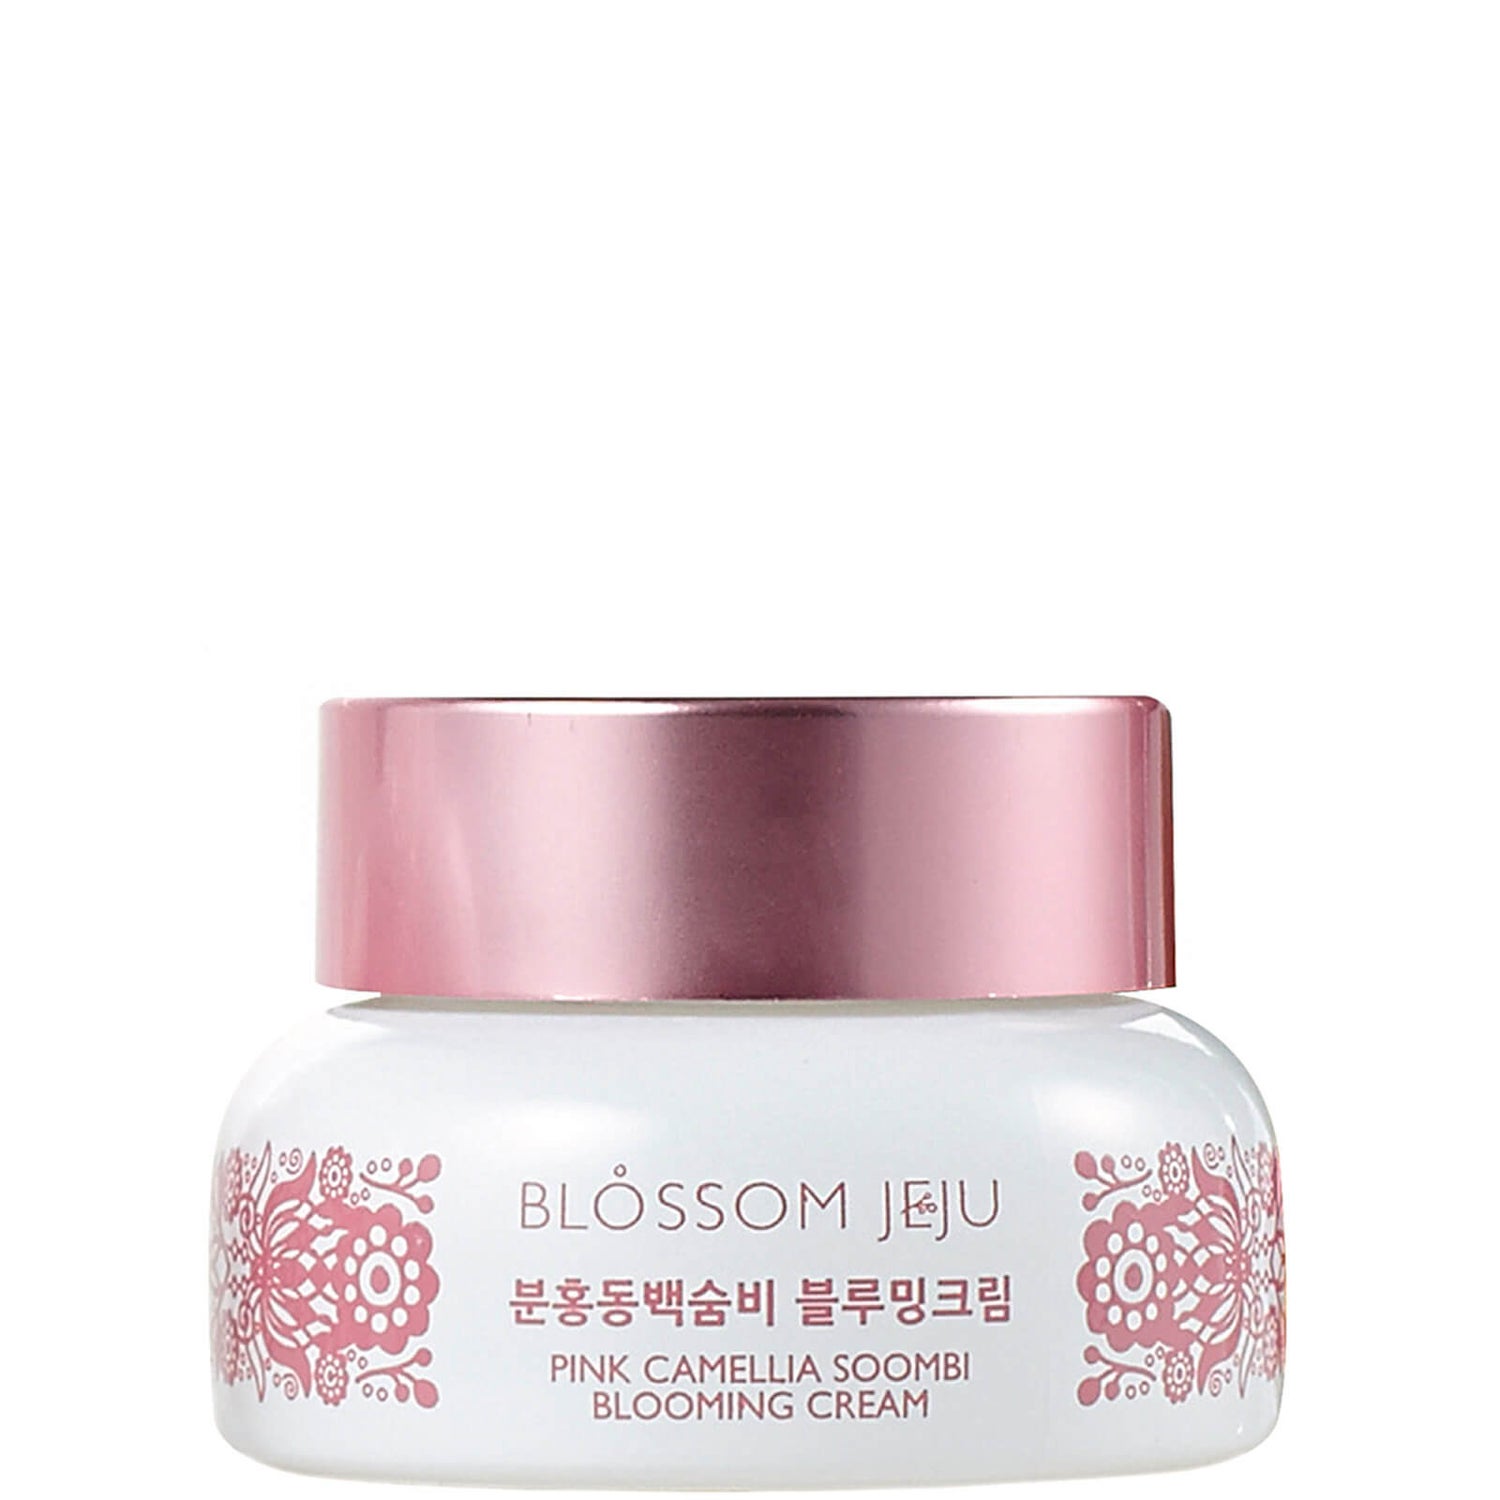 Blossom Jeju Pink Camellia Soombi Blooming Cream